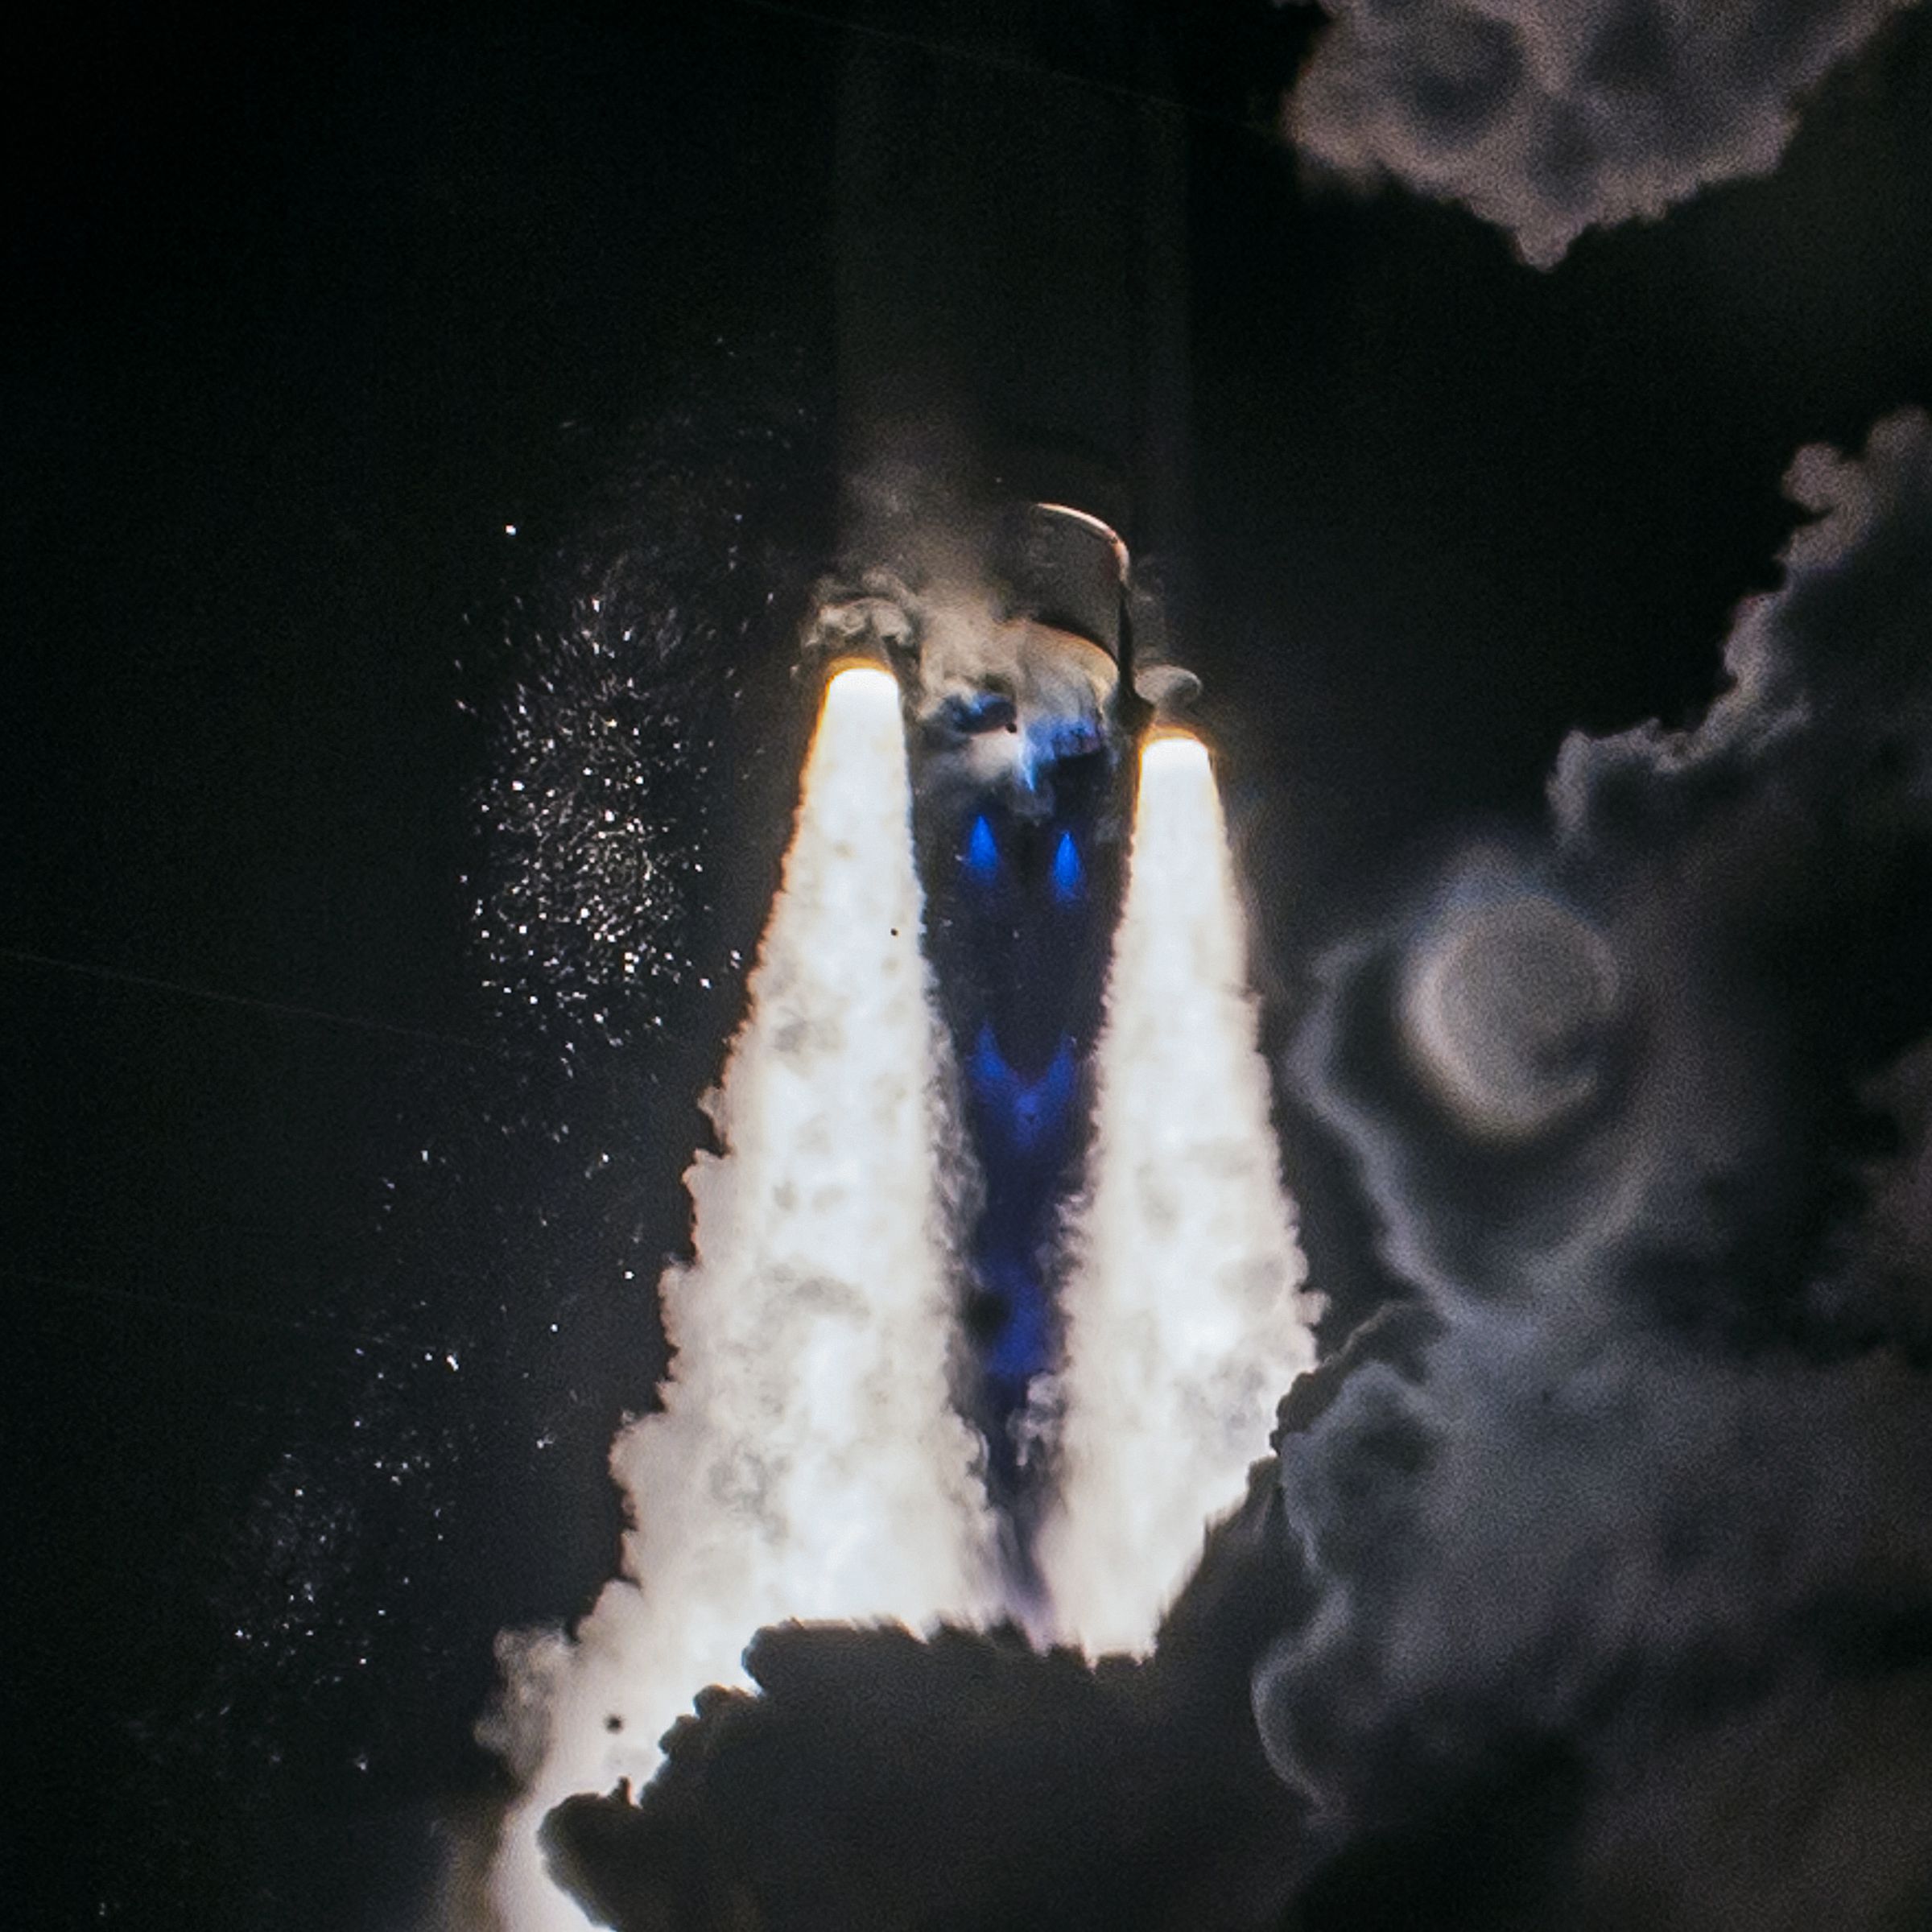 ULA rocket taking off